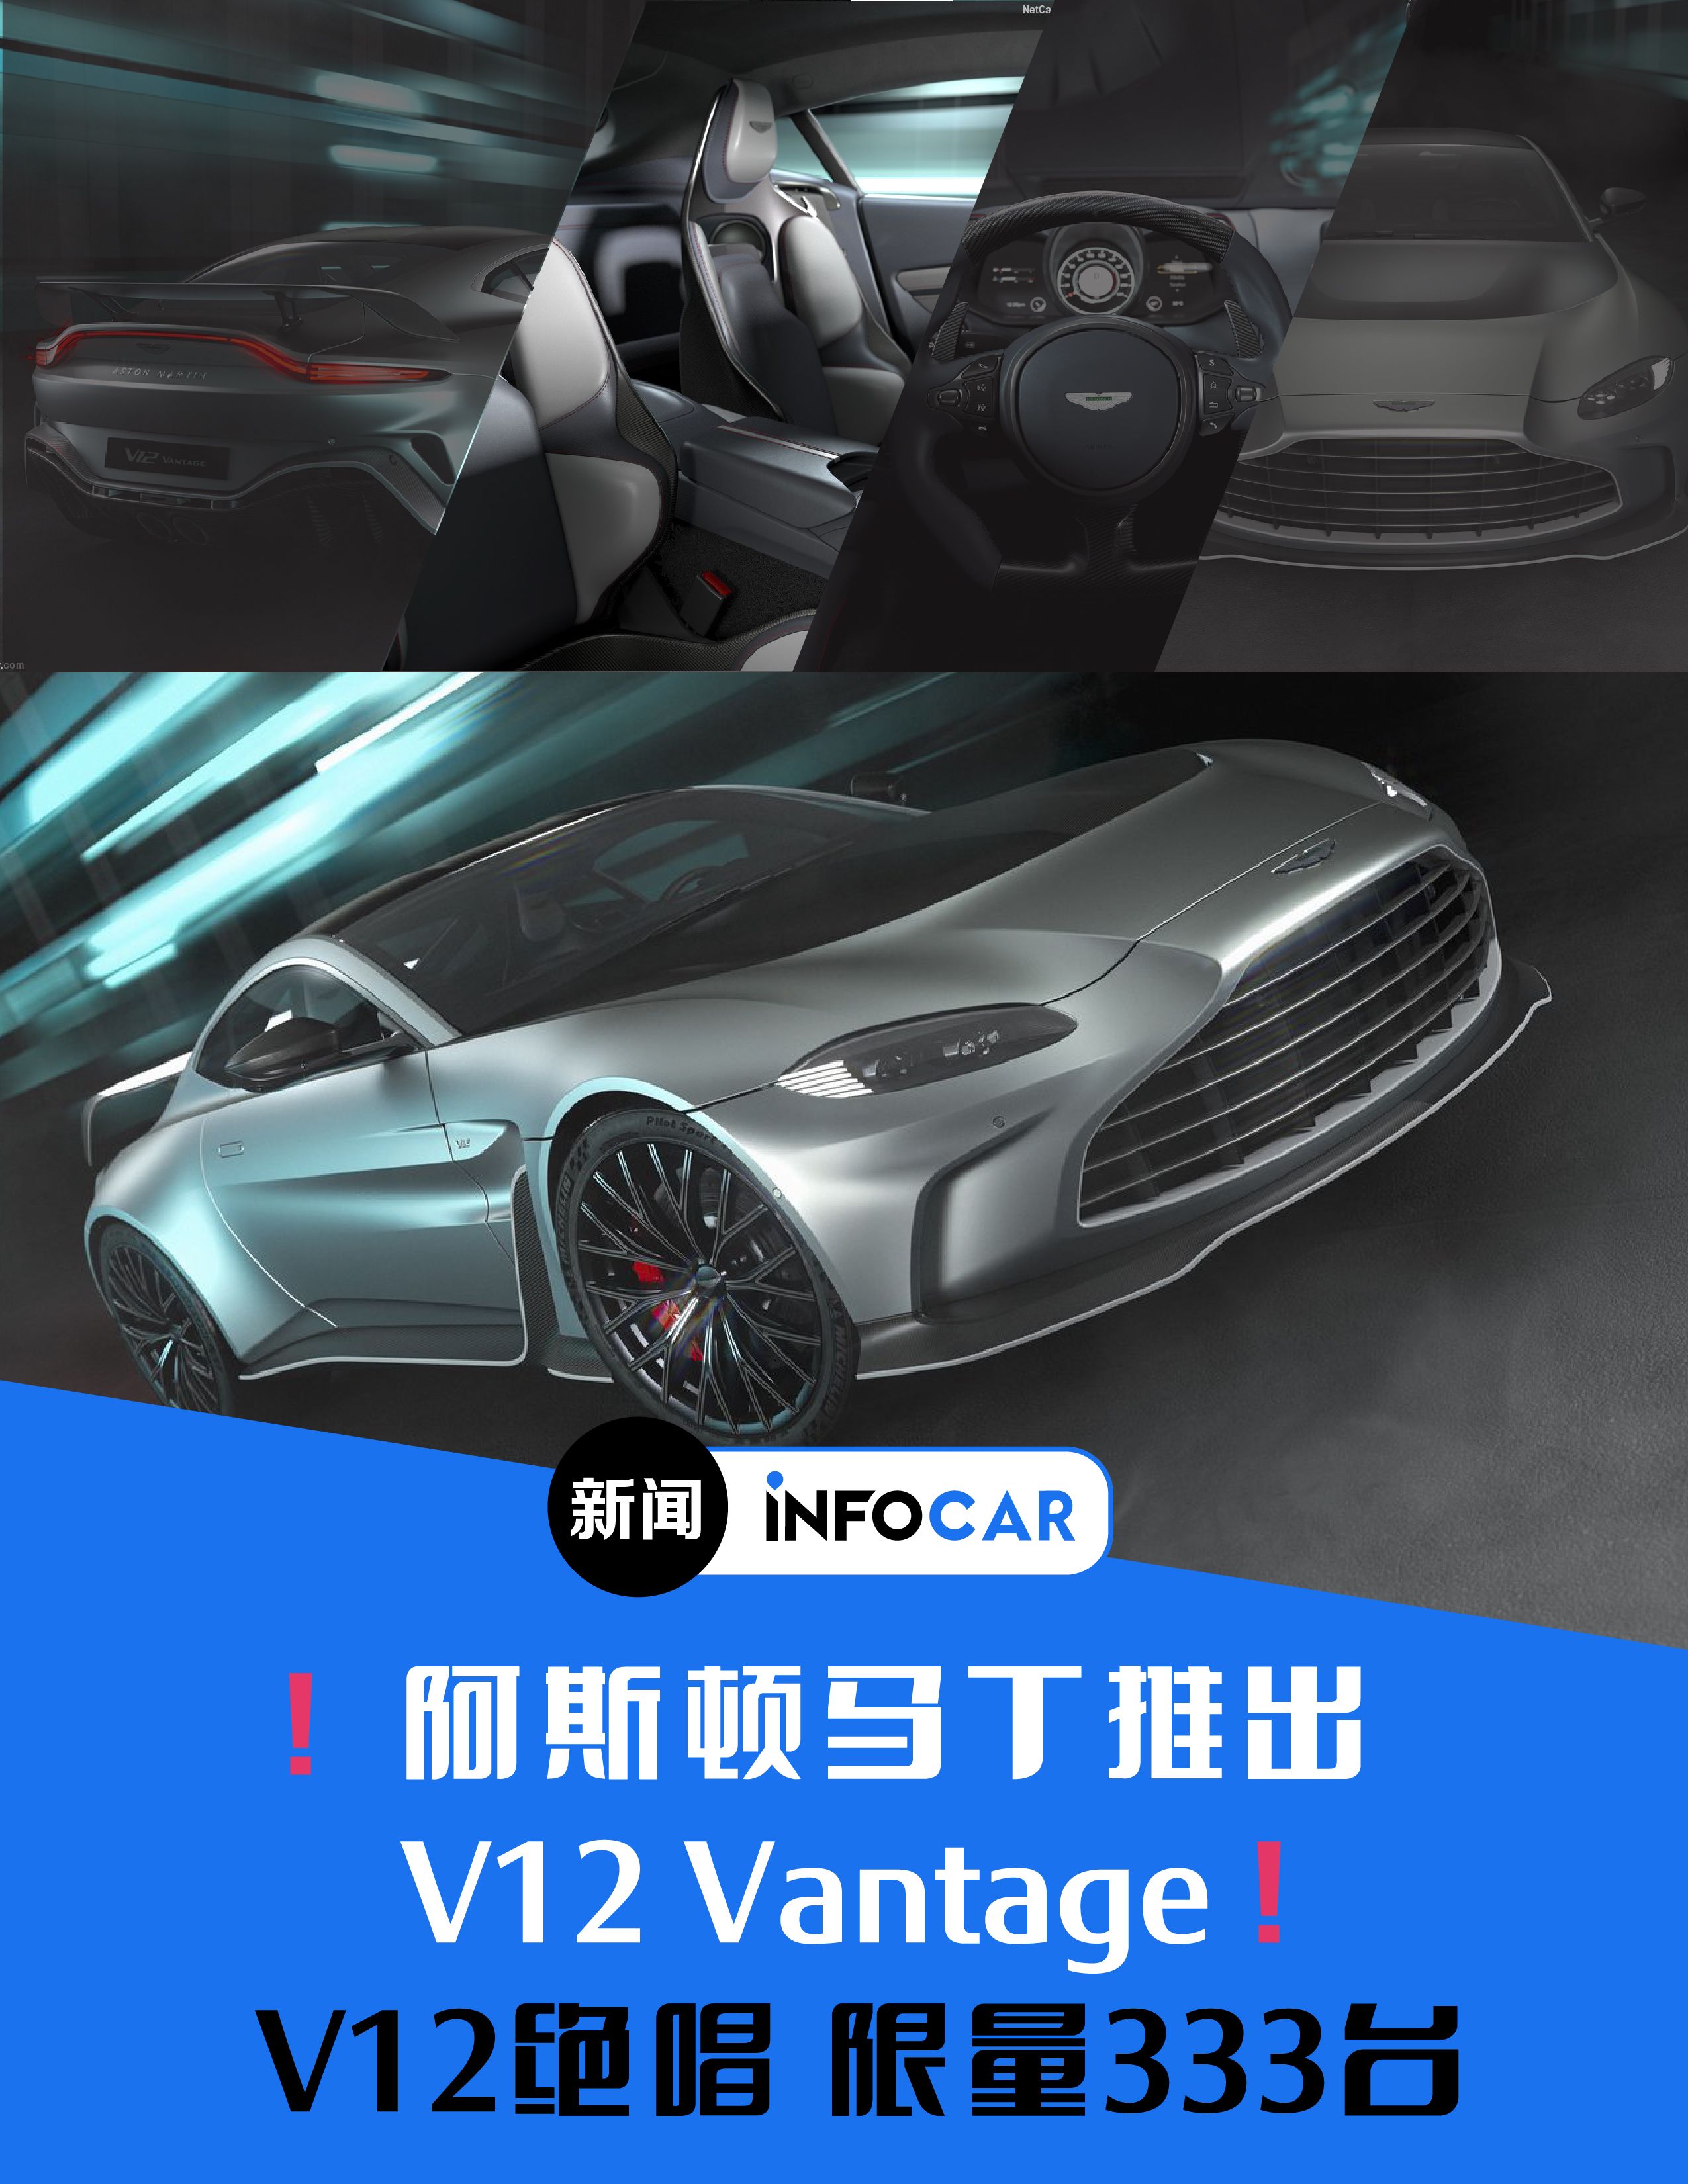 INFOCAR车闻：阿斯顿马丁推出V12 Vantage！限量333台，已全部售罄！